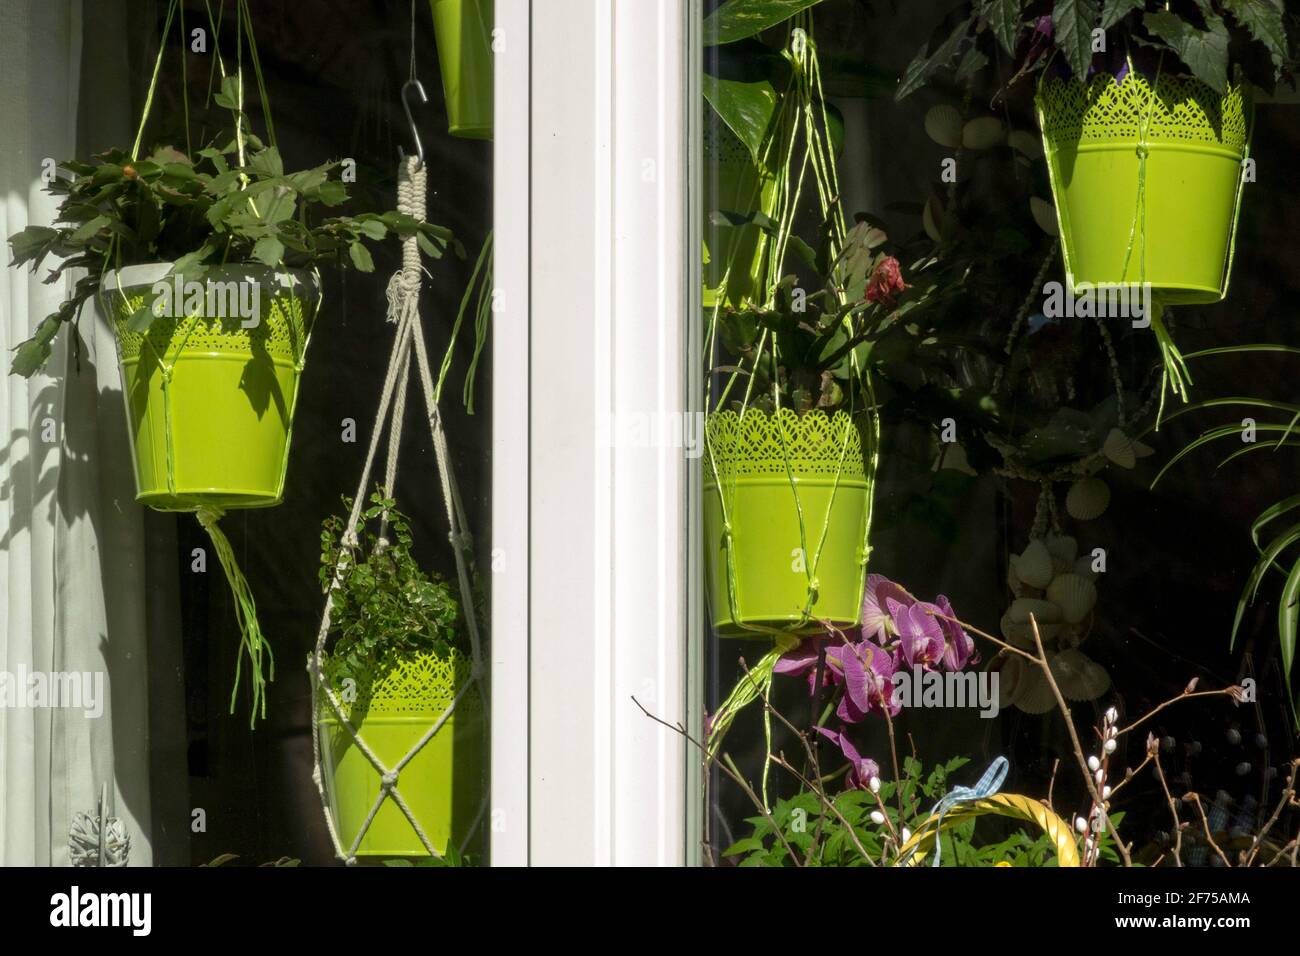 Houseplants in hanging pots in window Stock Photo